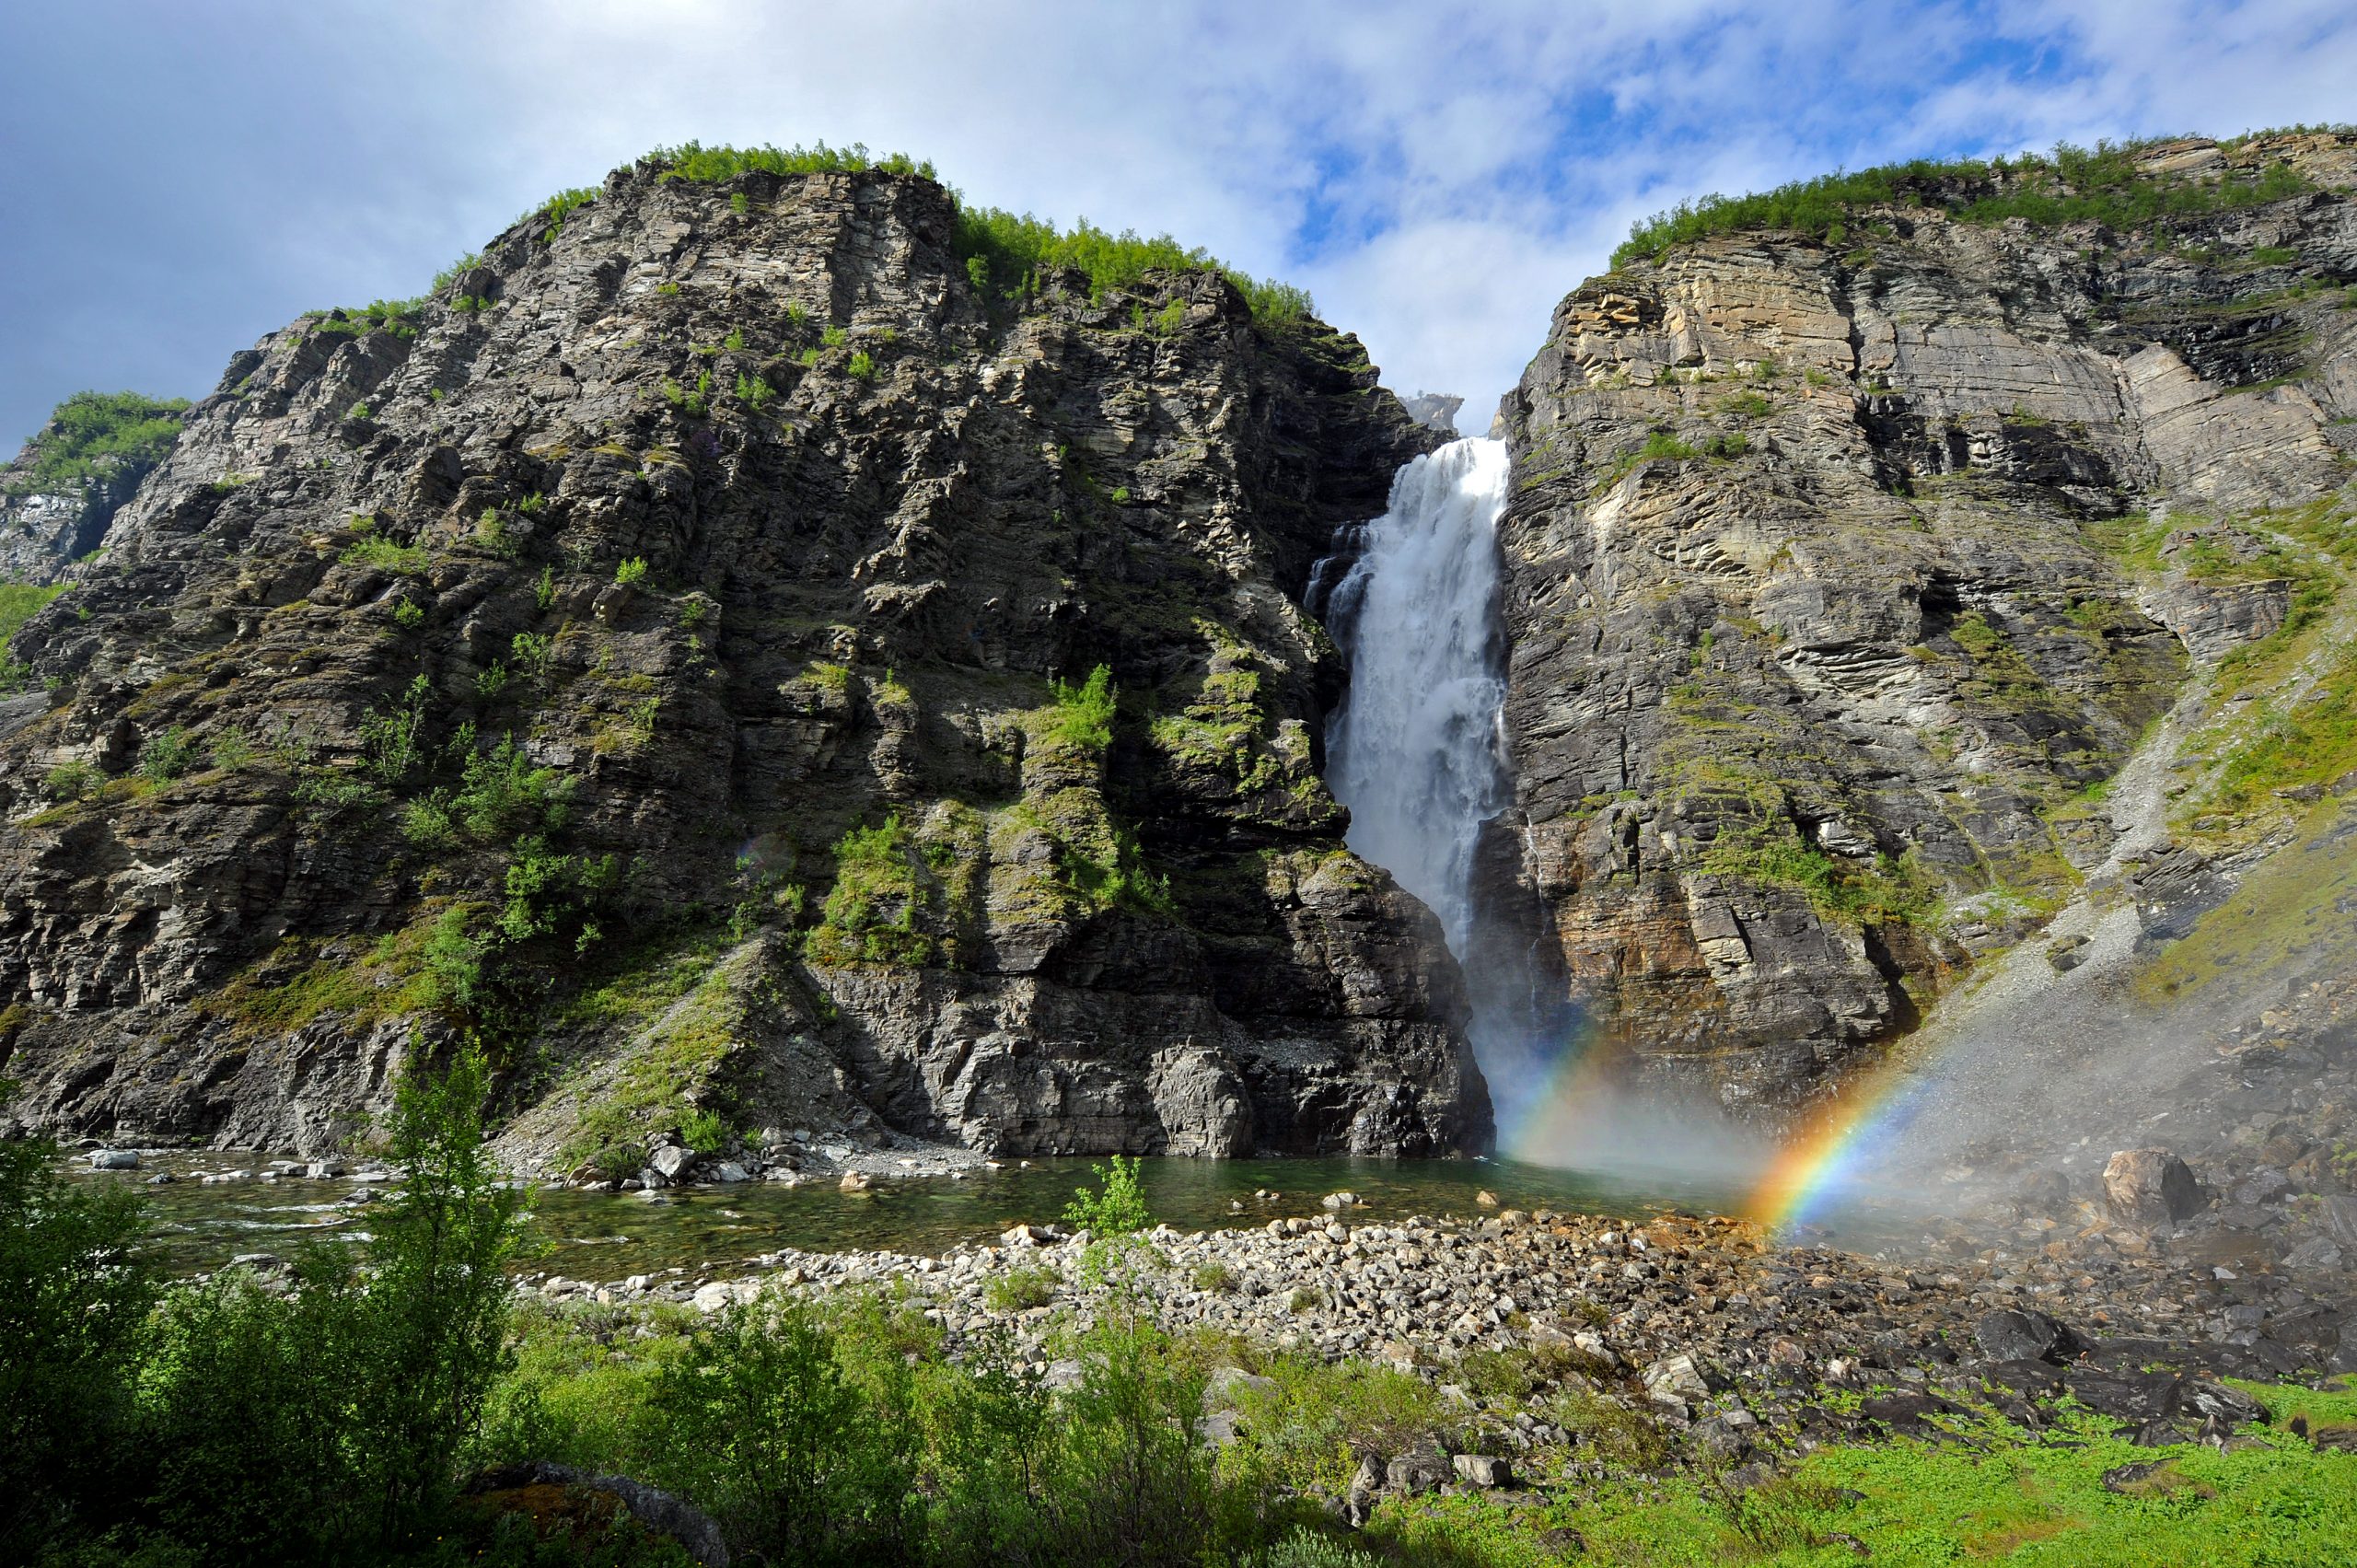 A waterfall running down a steep rocky wall